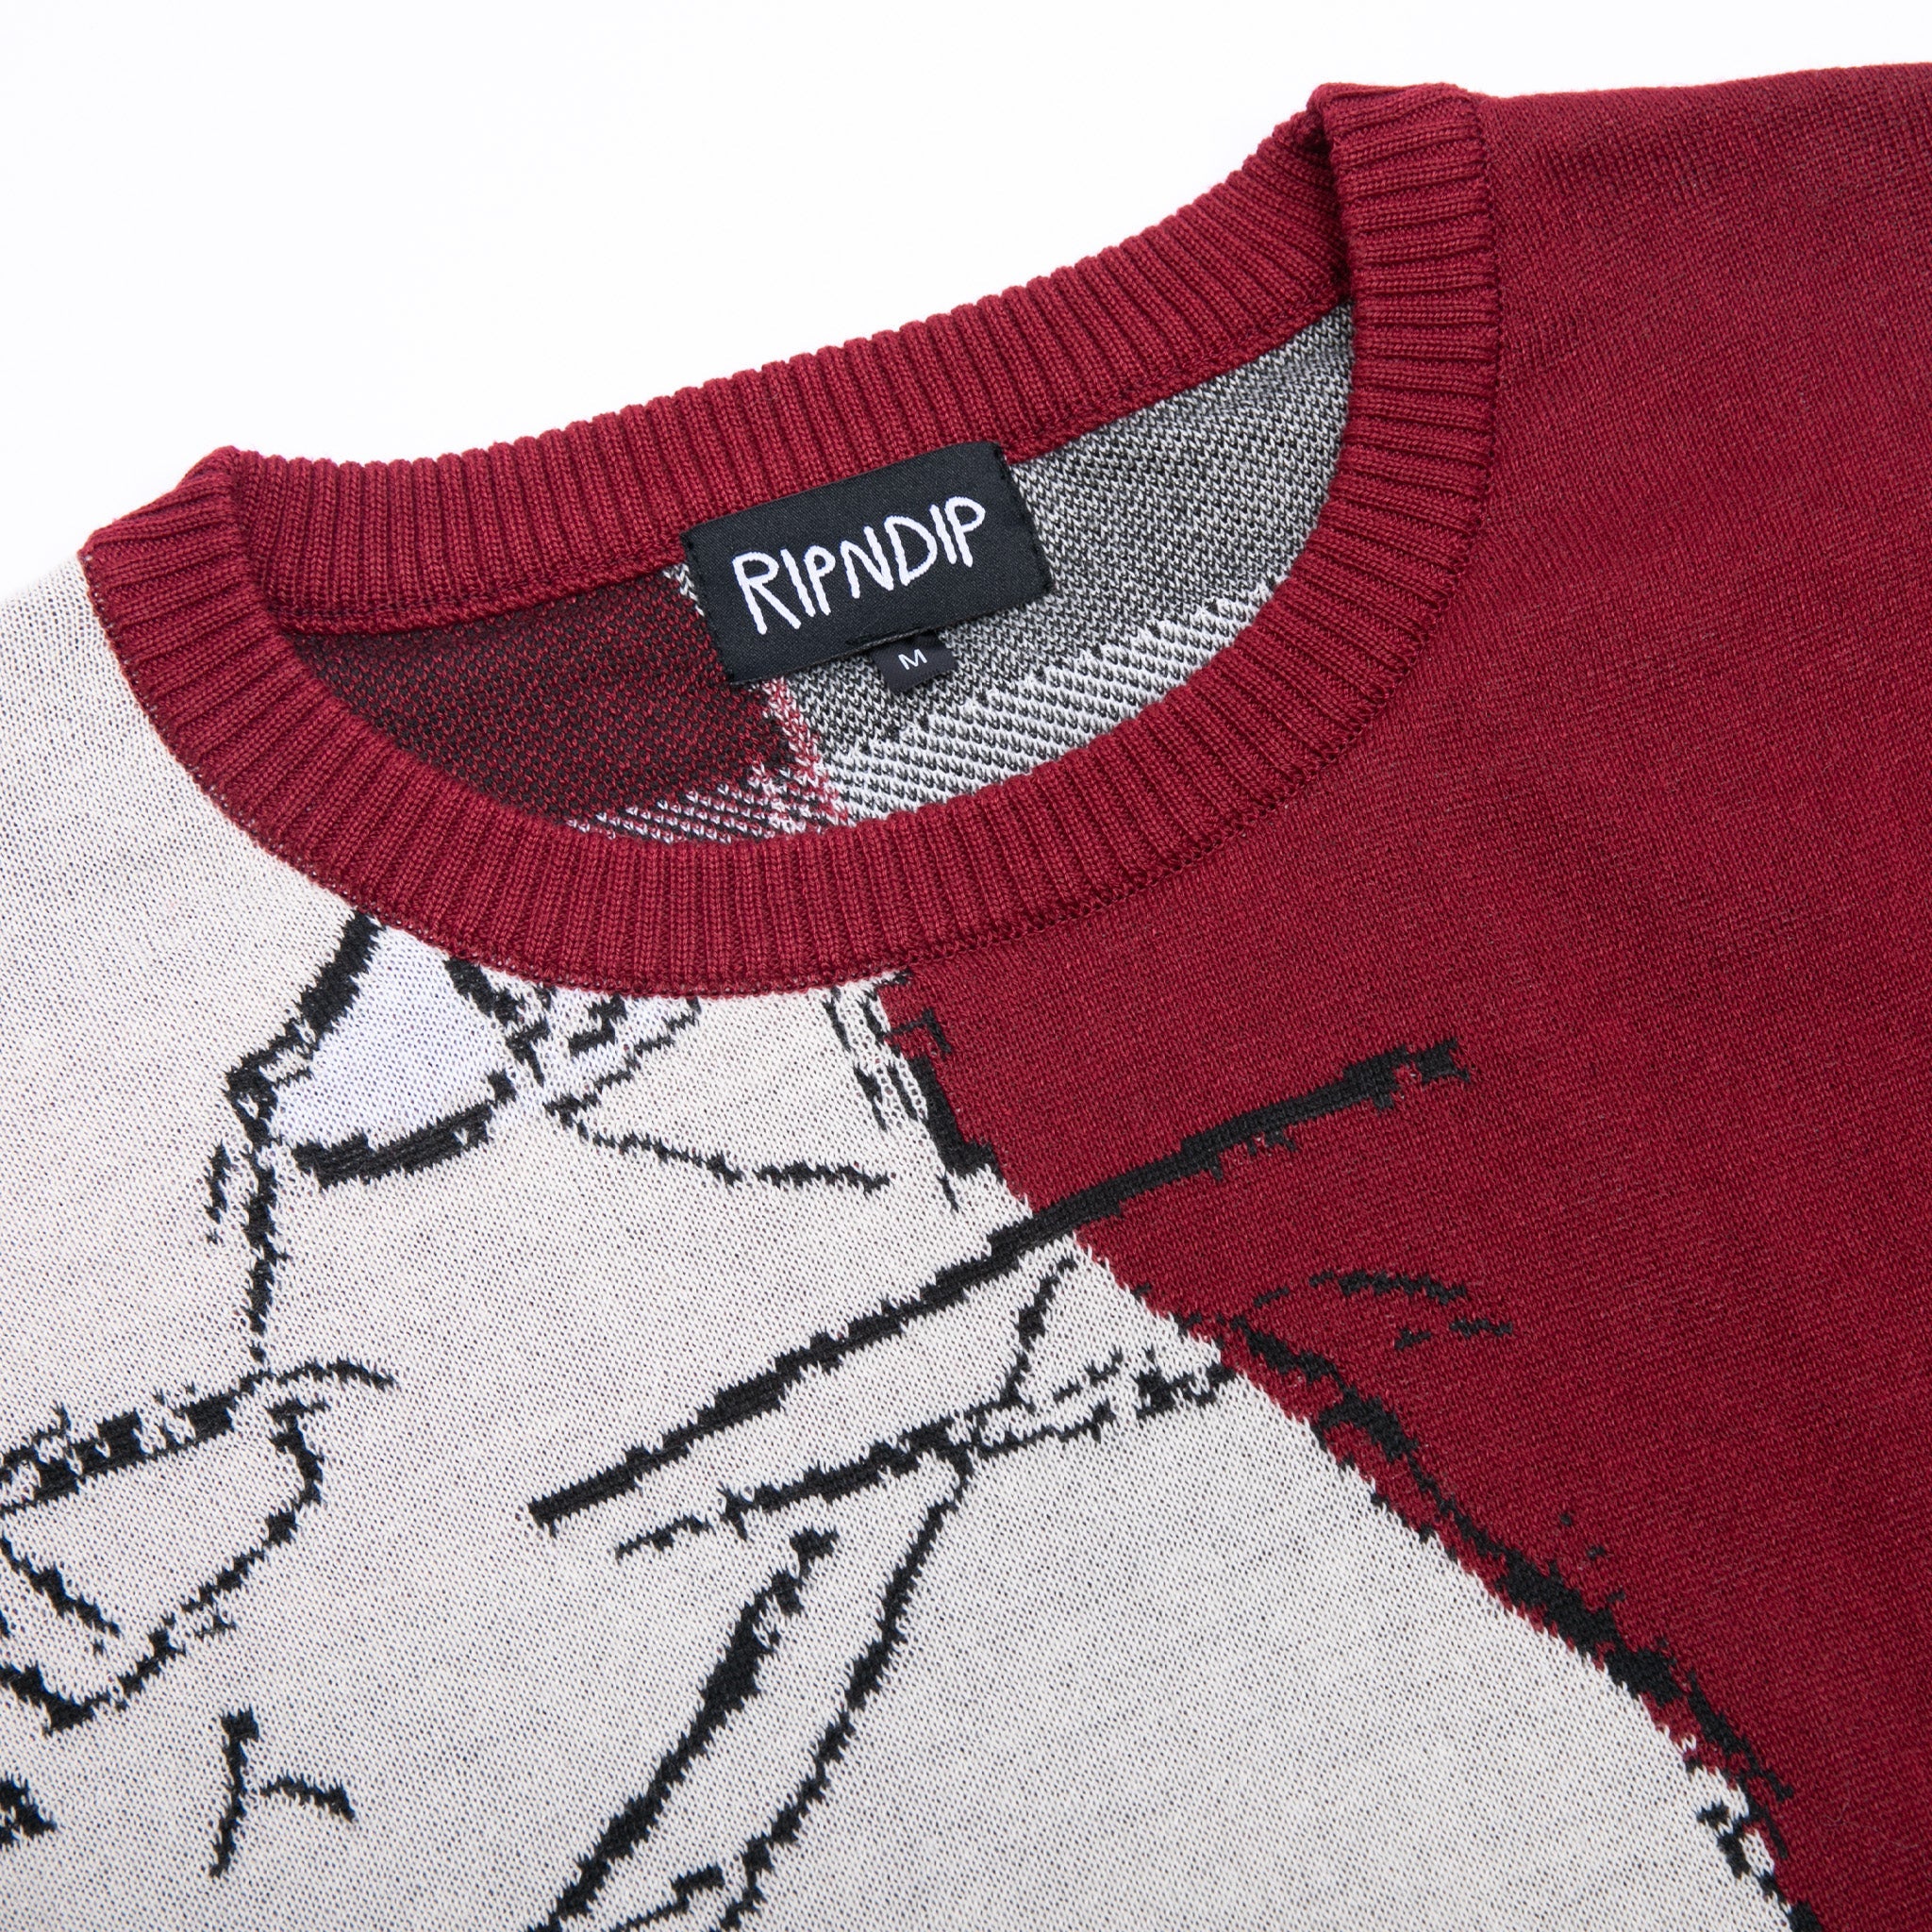 Nermhol Knit Sweater (Multi)